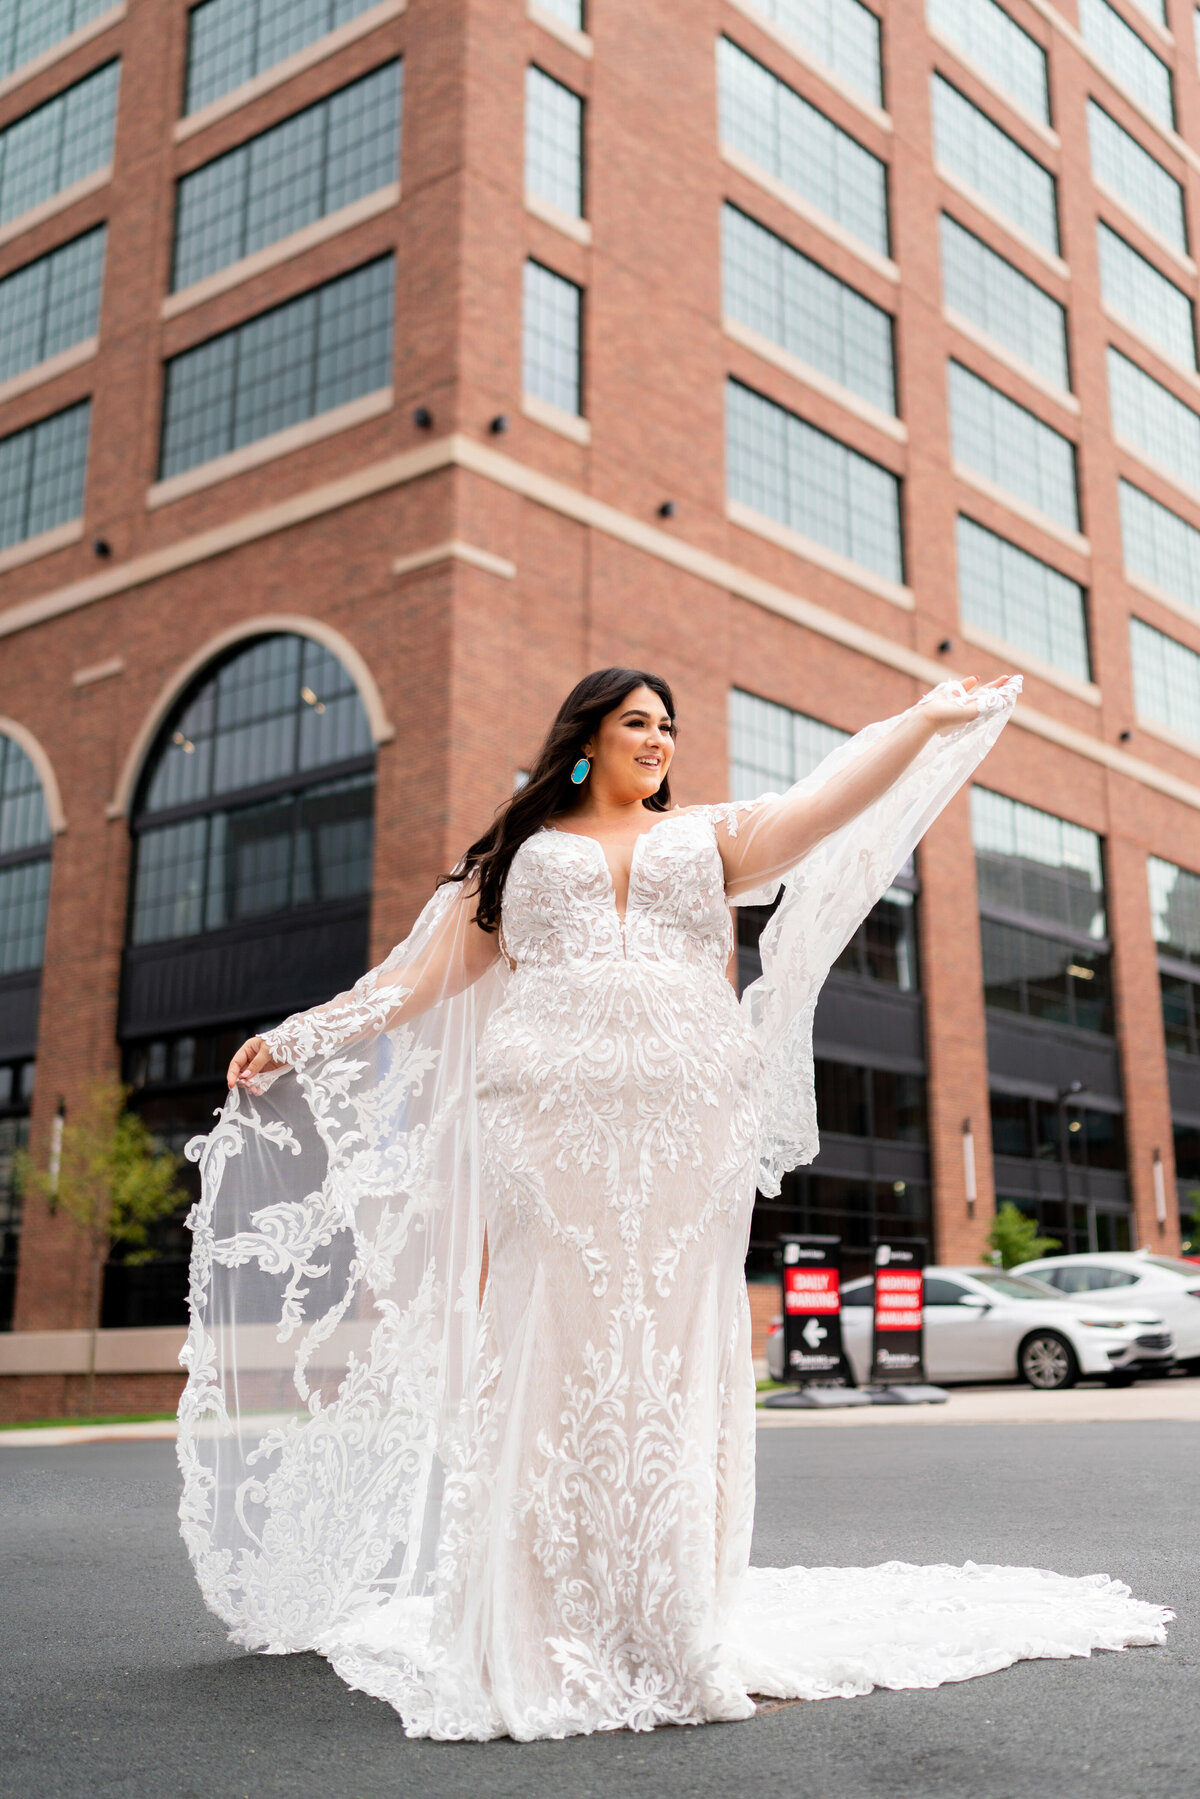 Luxe Bridal - Plus Size Bridal Shop - Minnesota Wedding Photography - RKH Images (295 of 331)